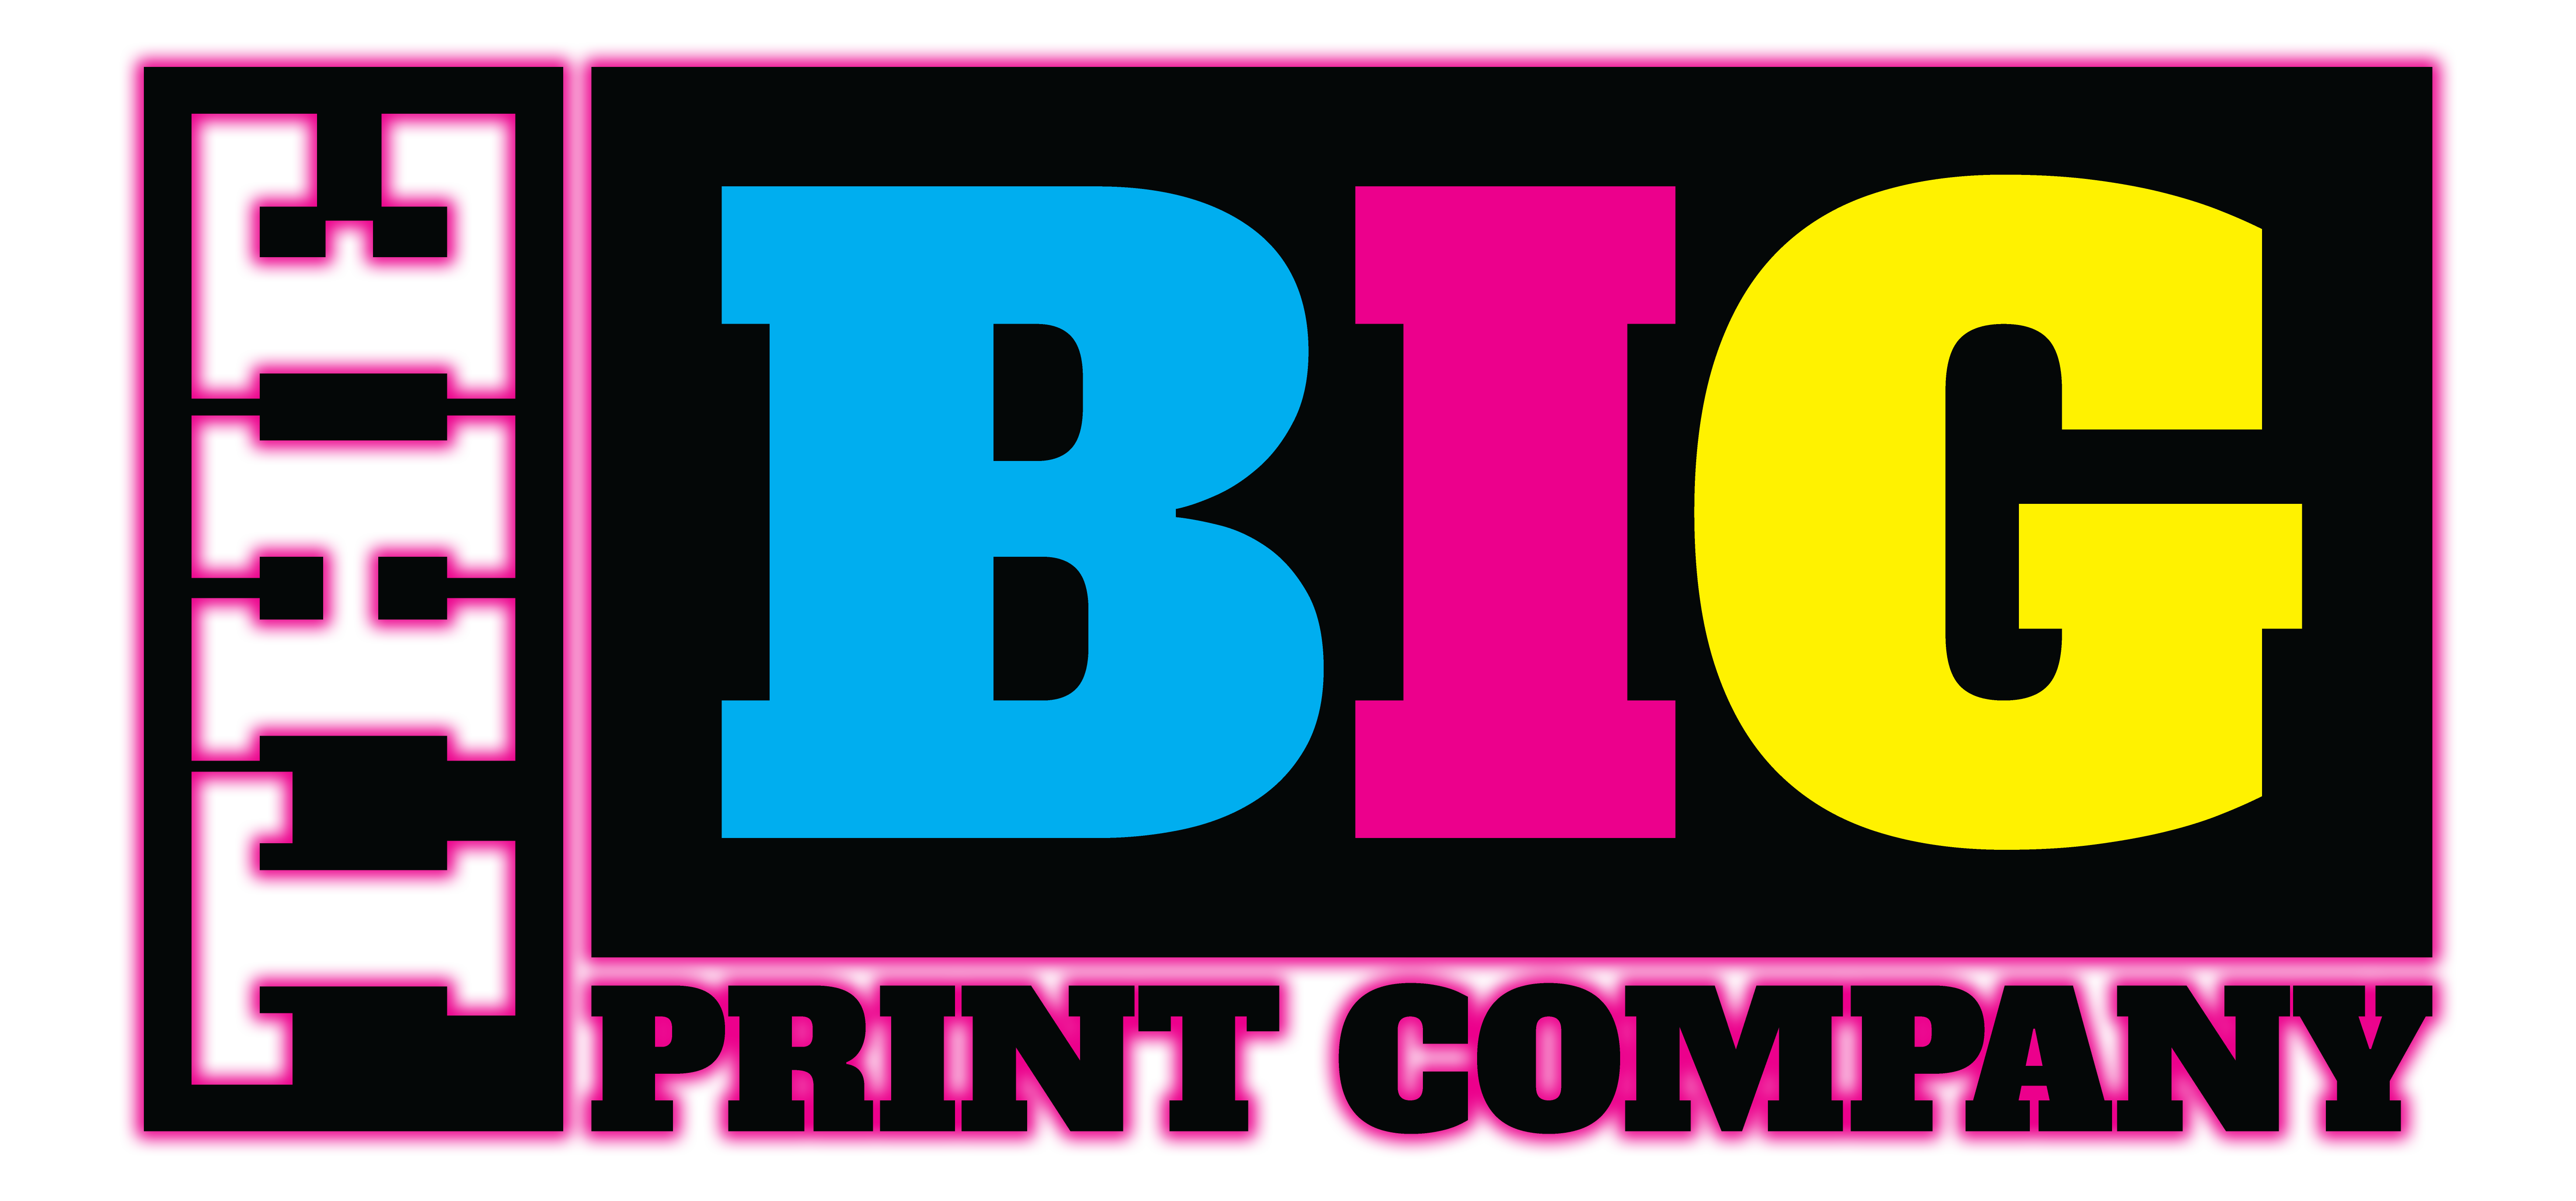 The Big Printing Company logo